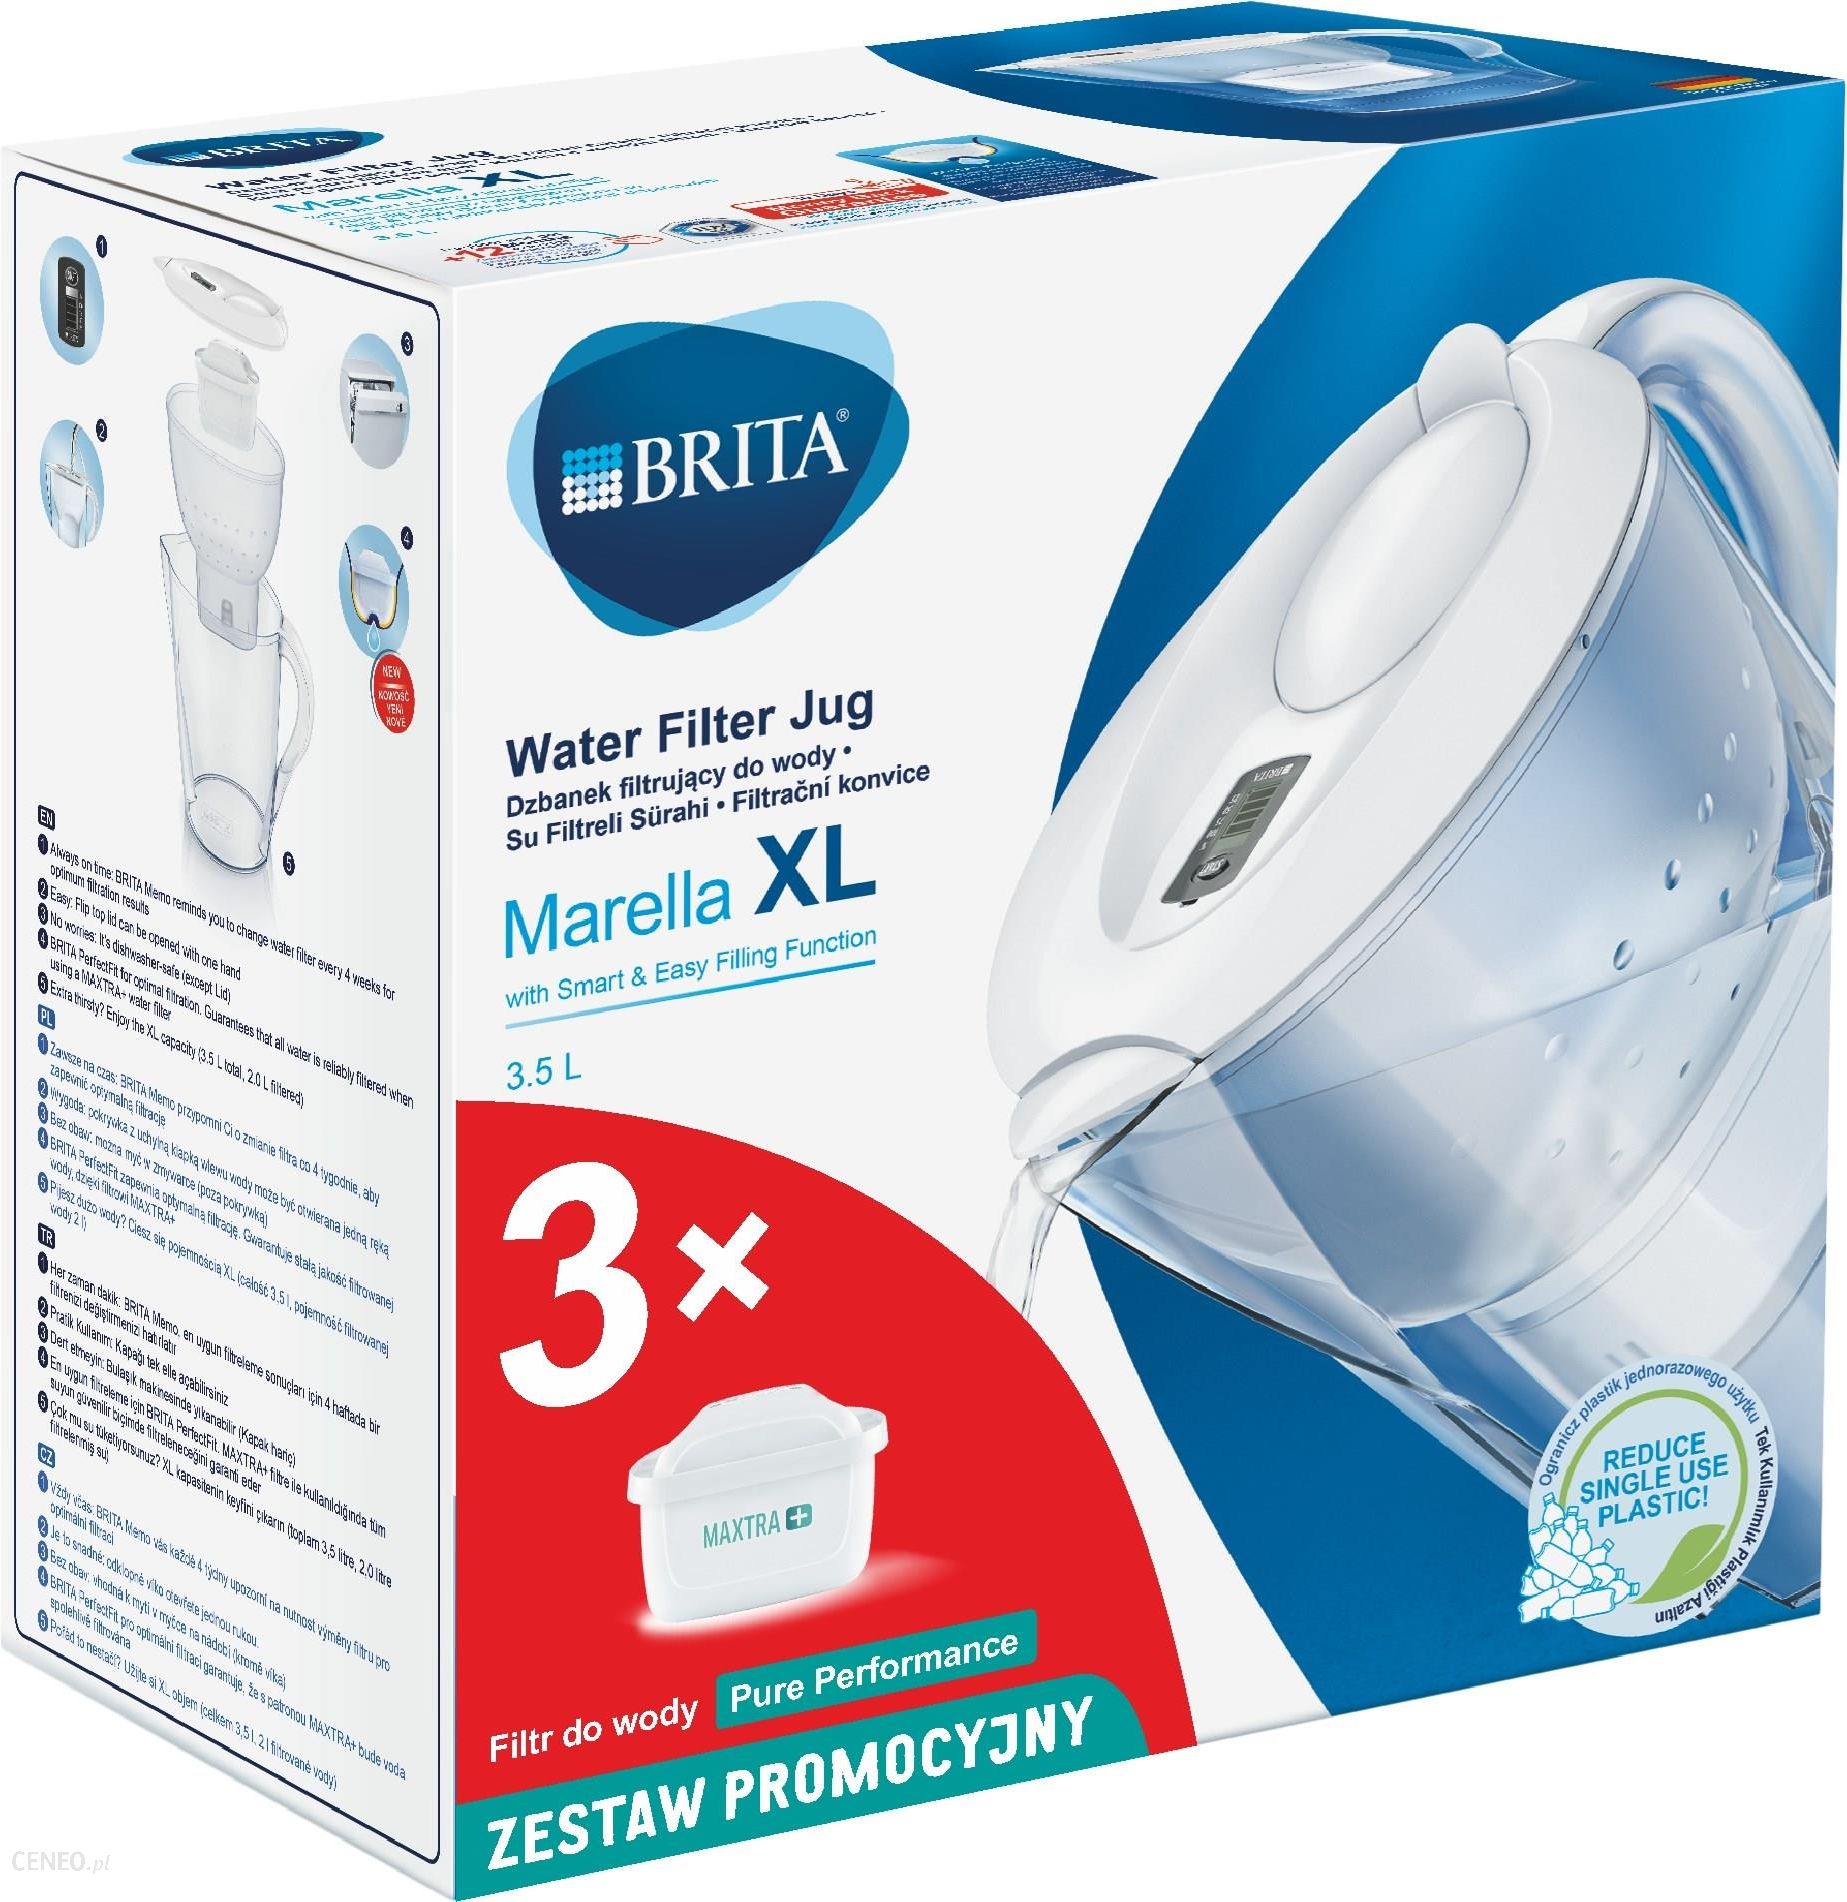 BRITA Marella XL biały + 3 filtry